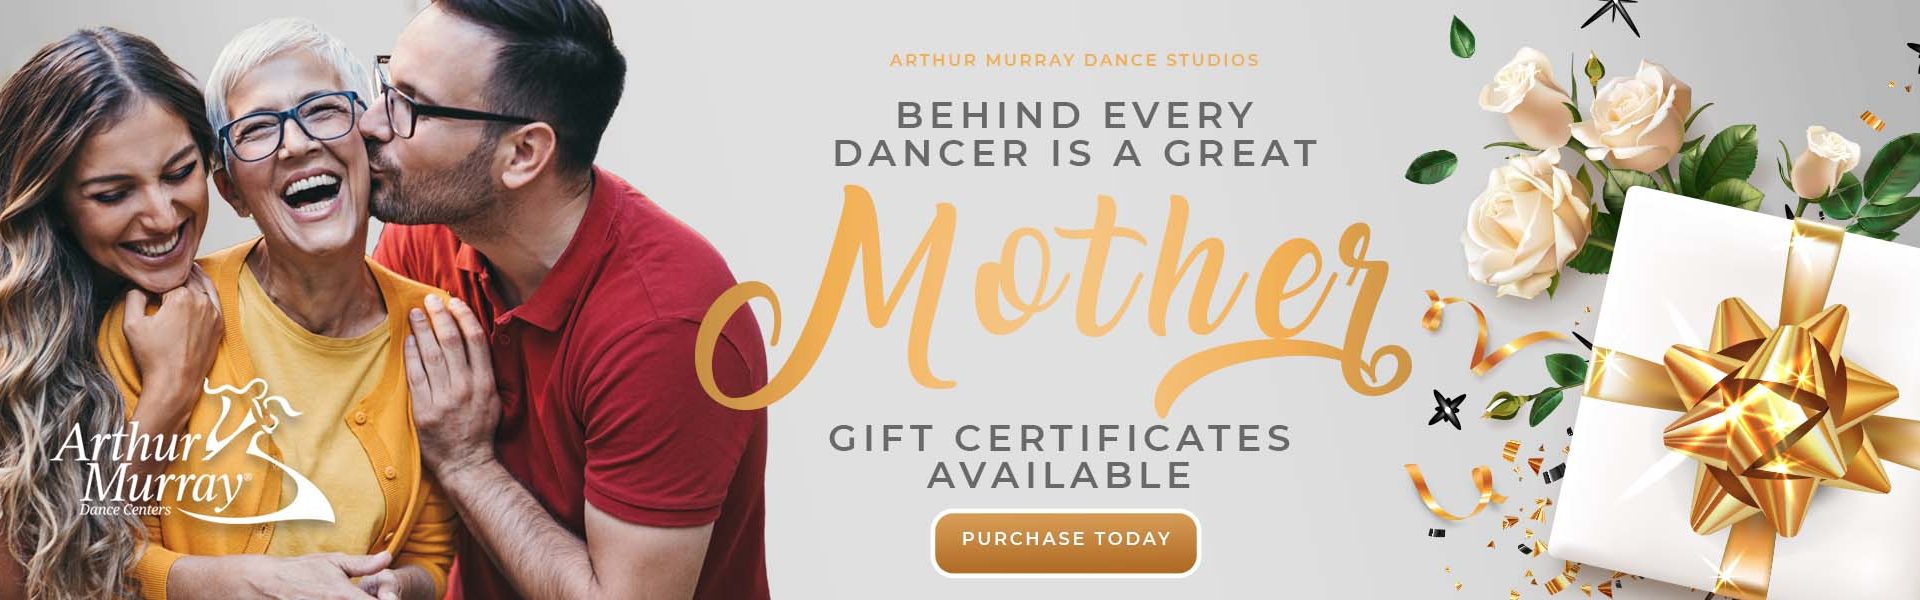 Beginners Dance Lessons | Arthur Murray Dallas Dance Studio